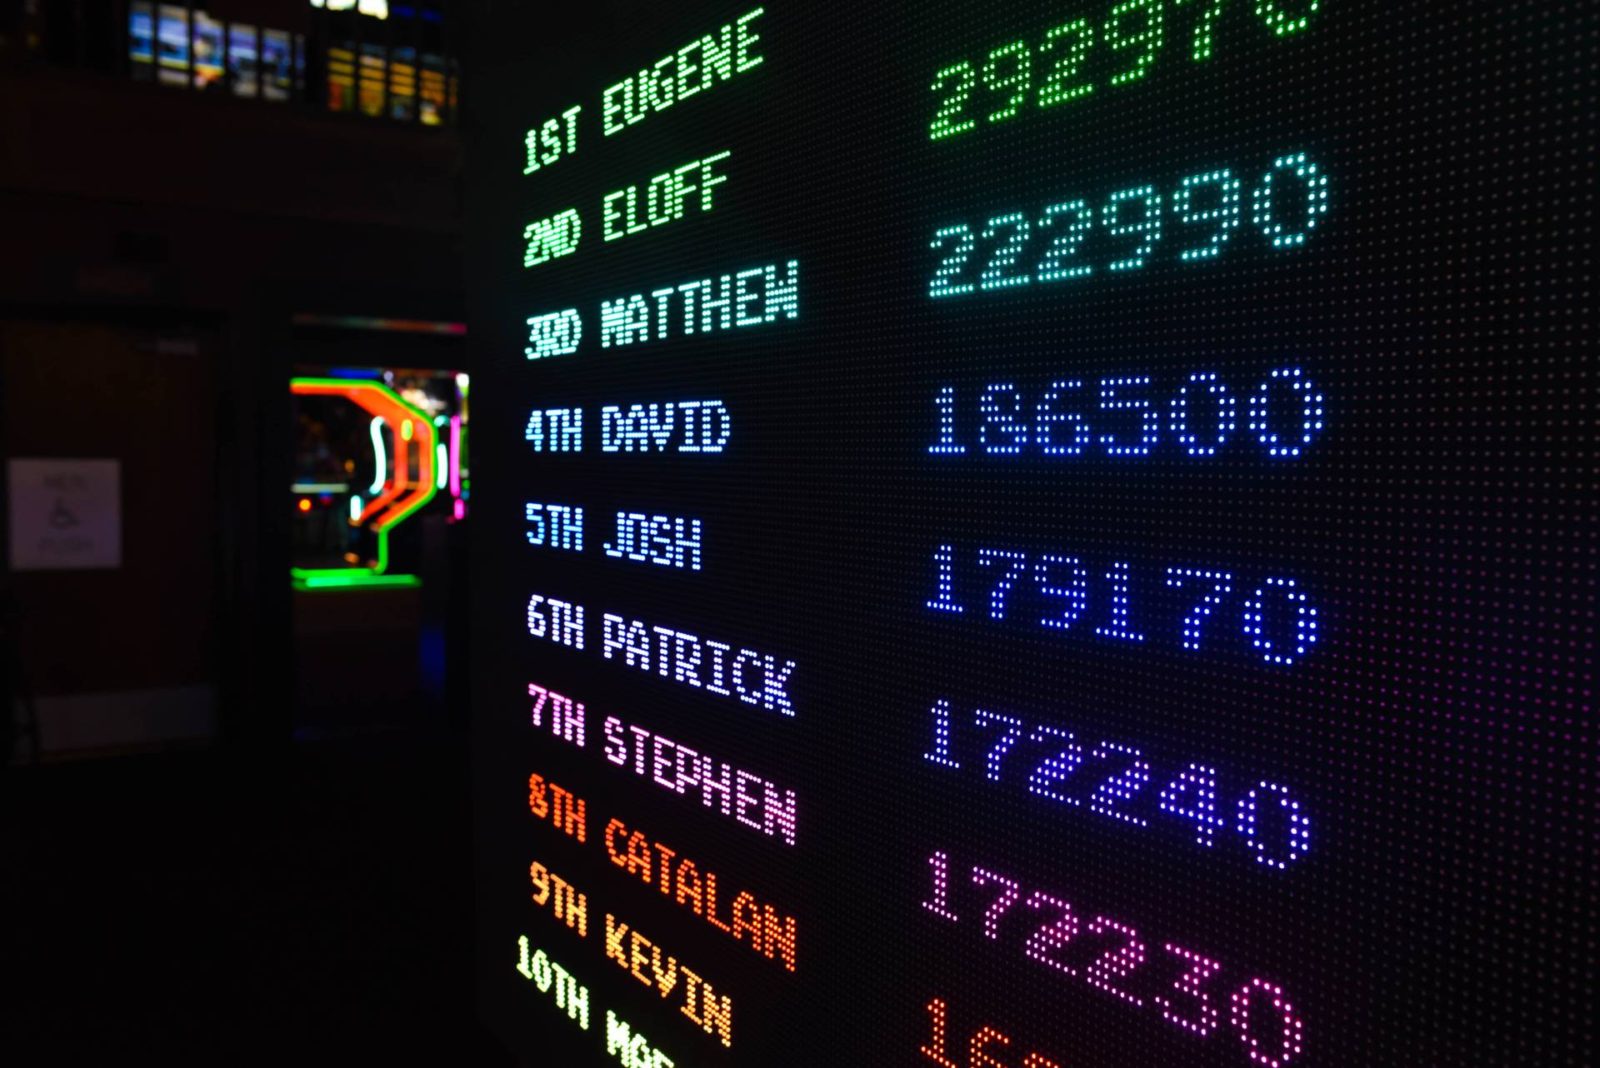 Billboard scoreboard with multicoloured rows of scores 